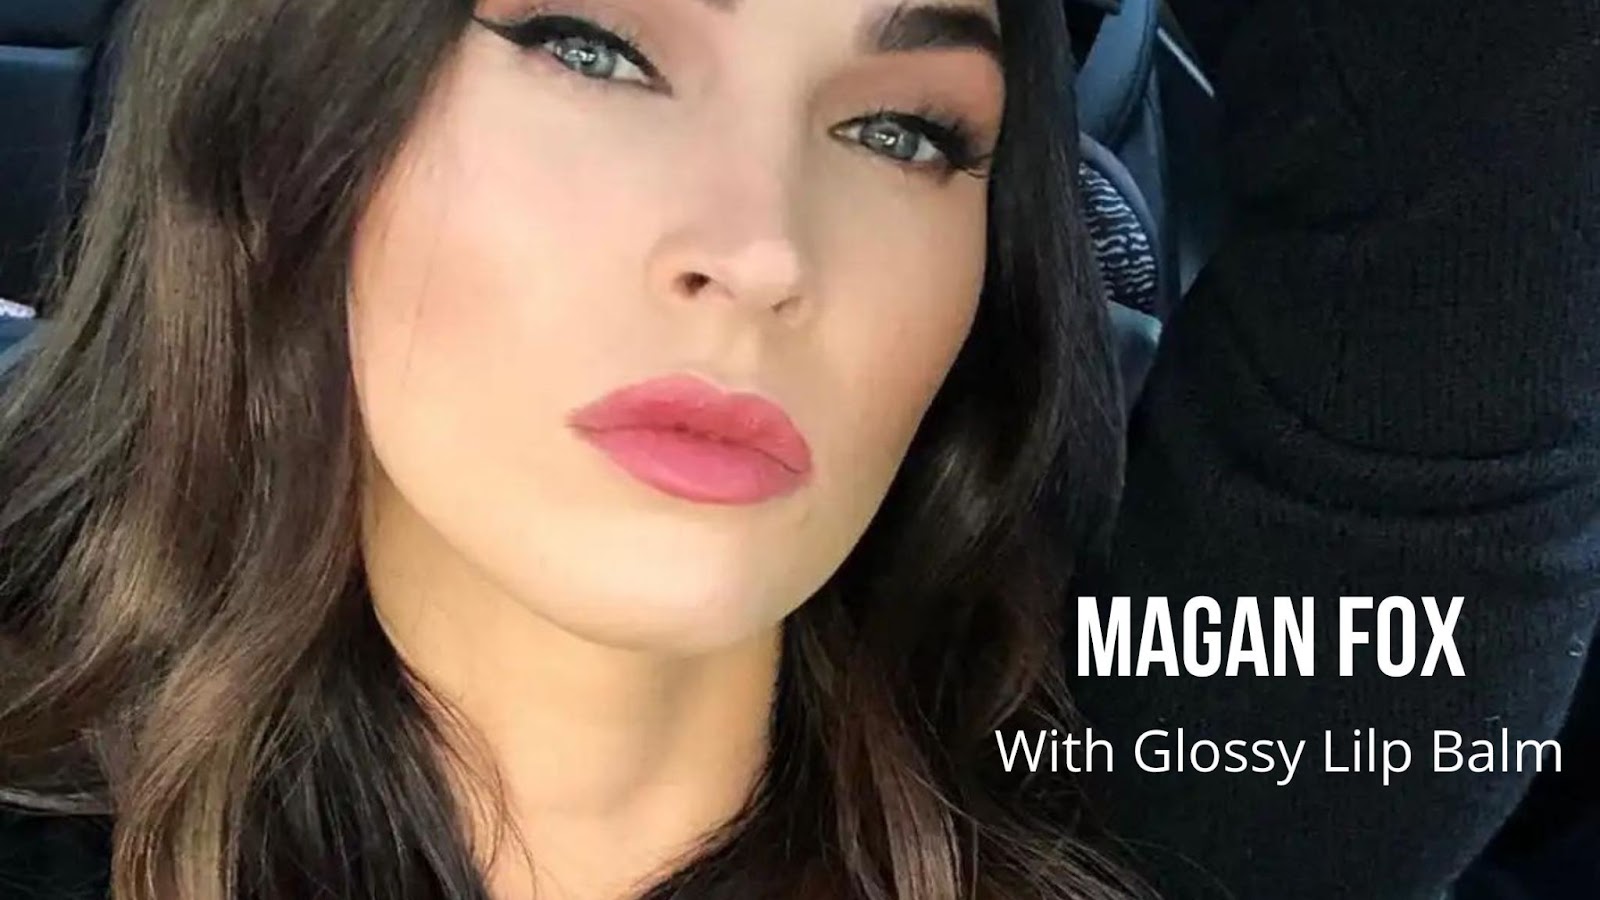 Megan fox with glossy lip balm